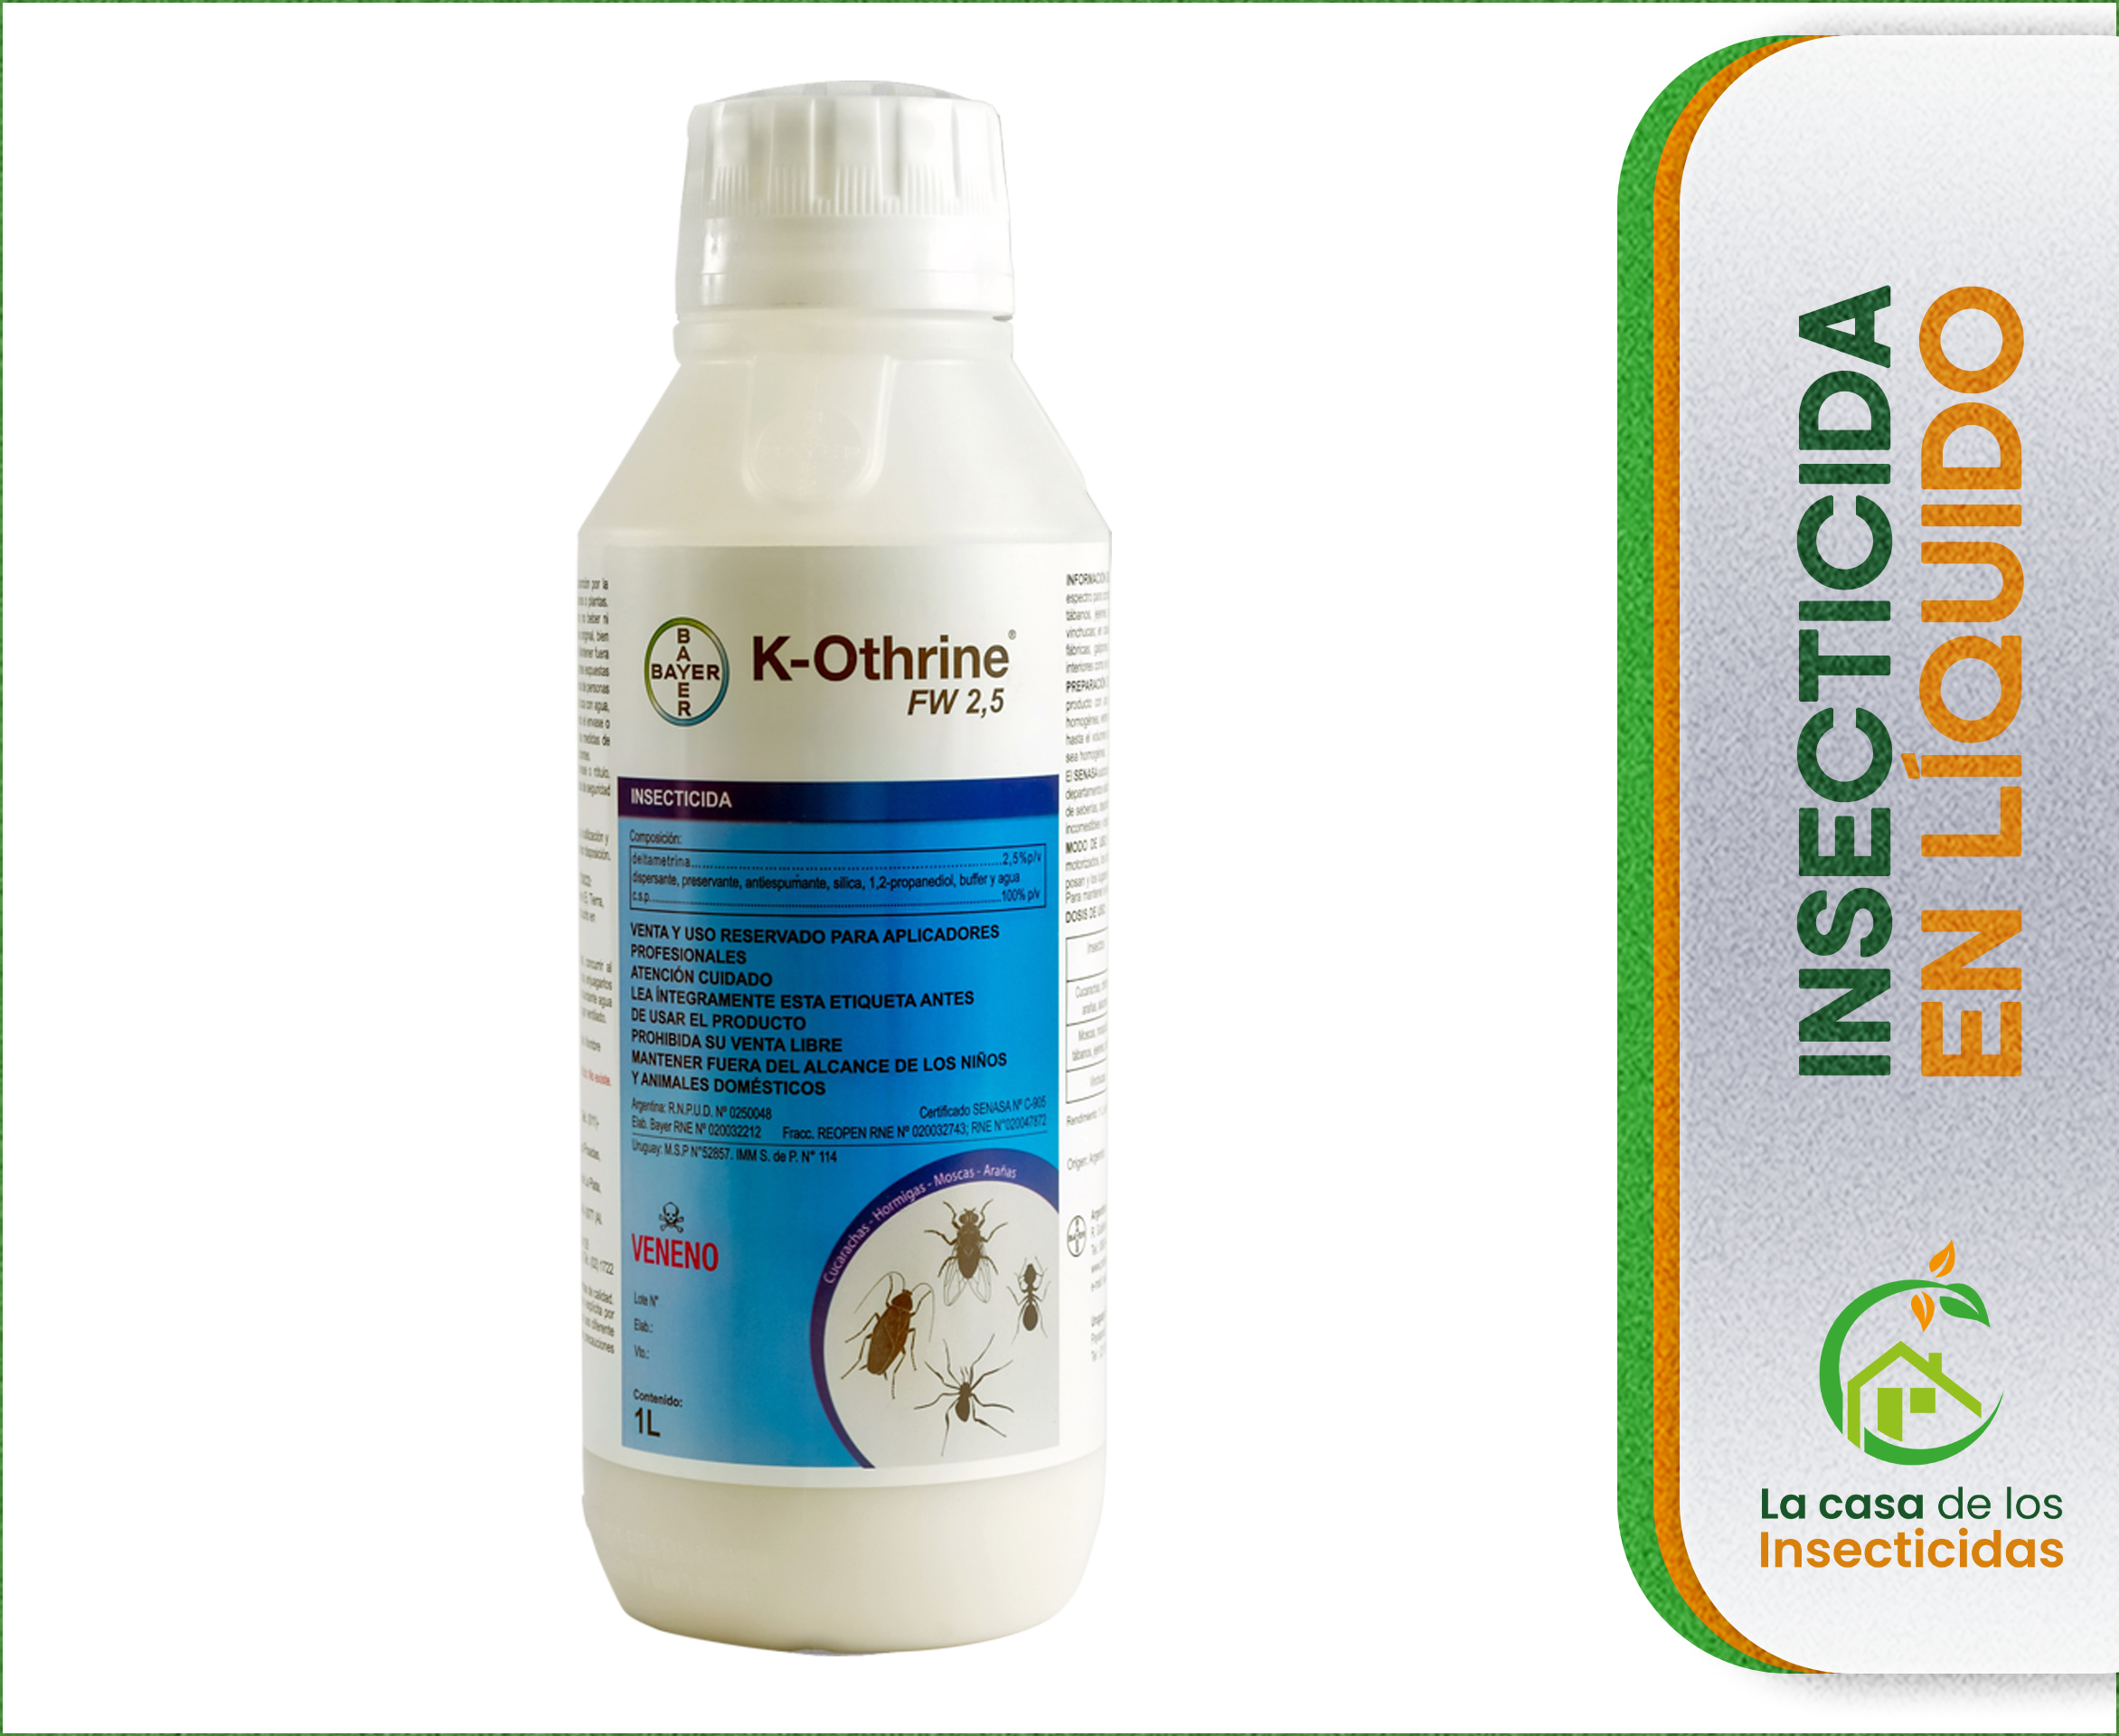 K-Othrine FW 2.5% Insecticida control de plagas profesional.